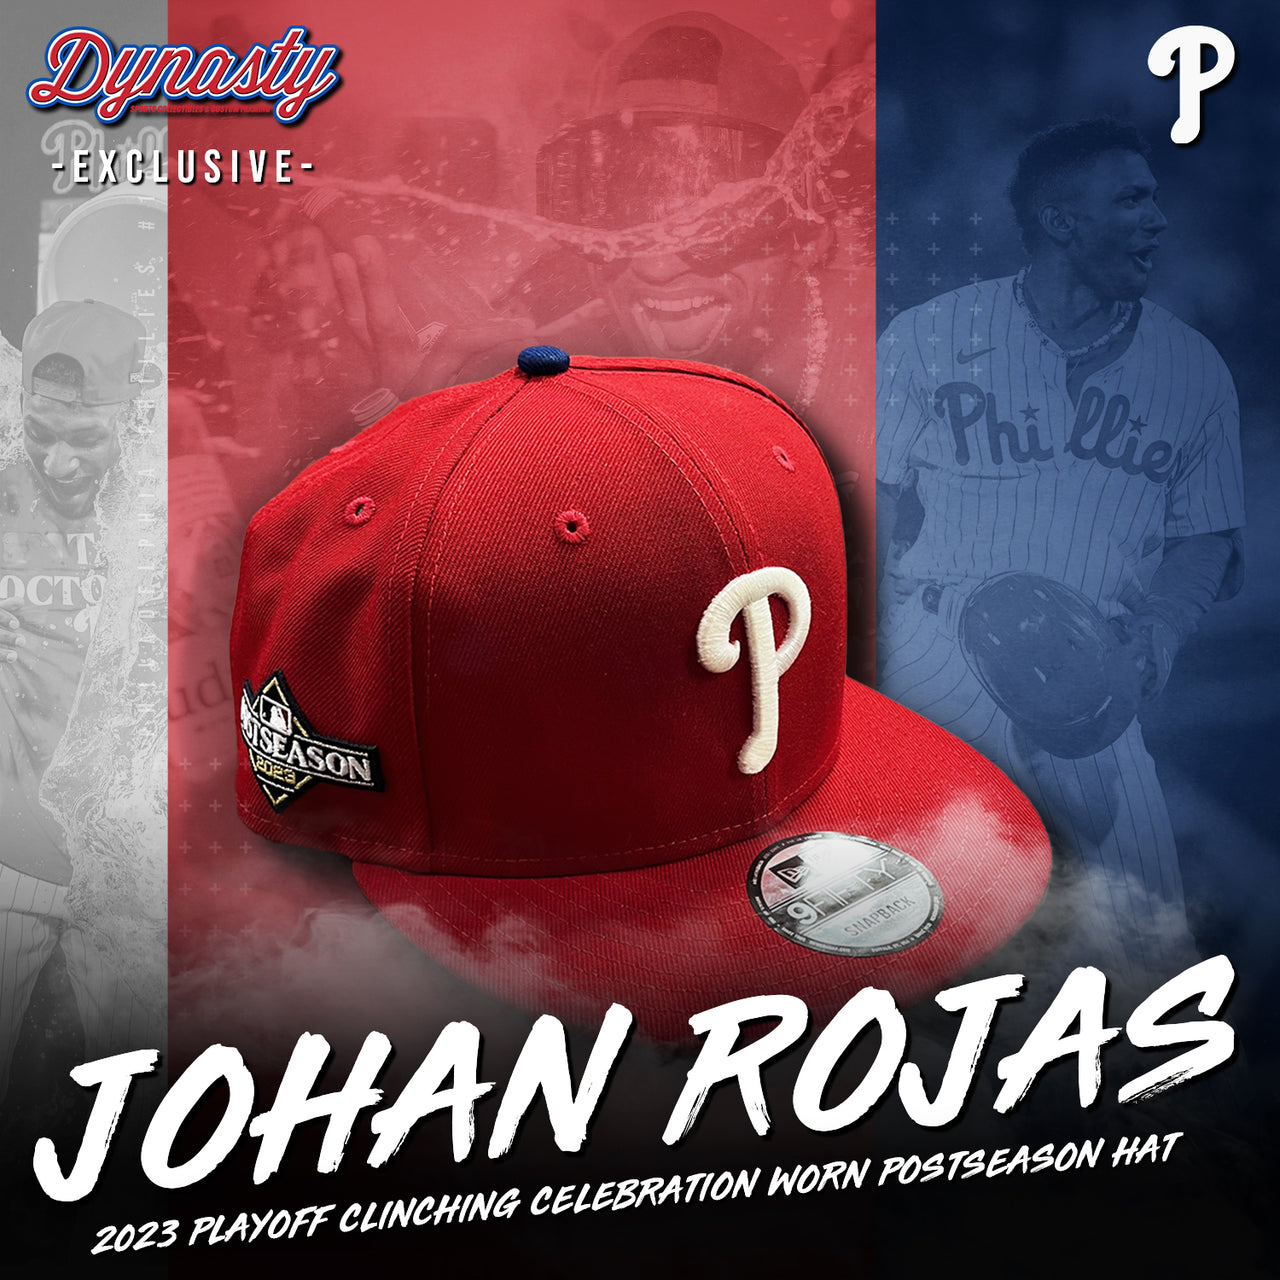 Johan Rojas Celebration Worn Hat From Phillies Postseason Clinching Game